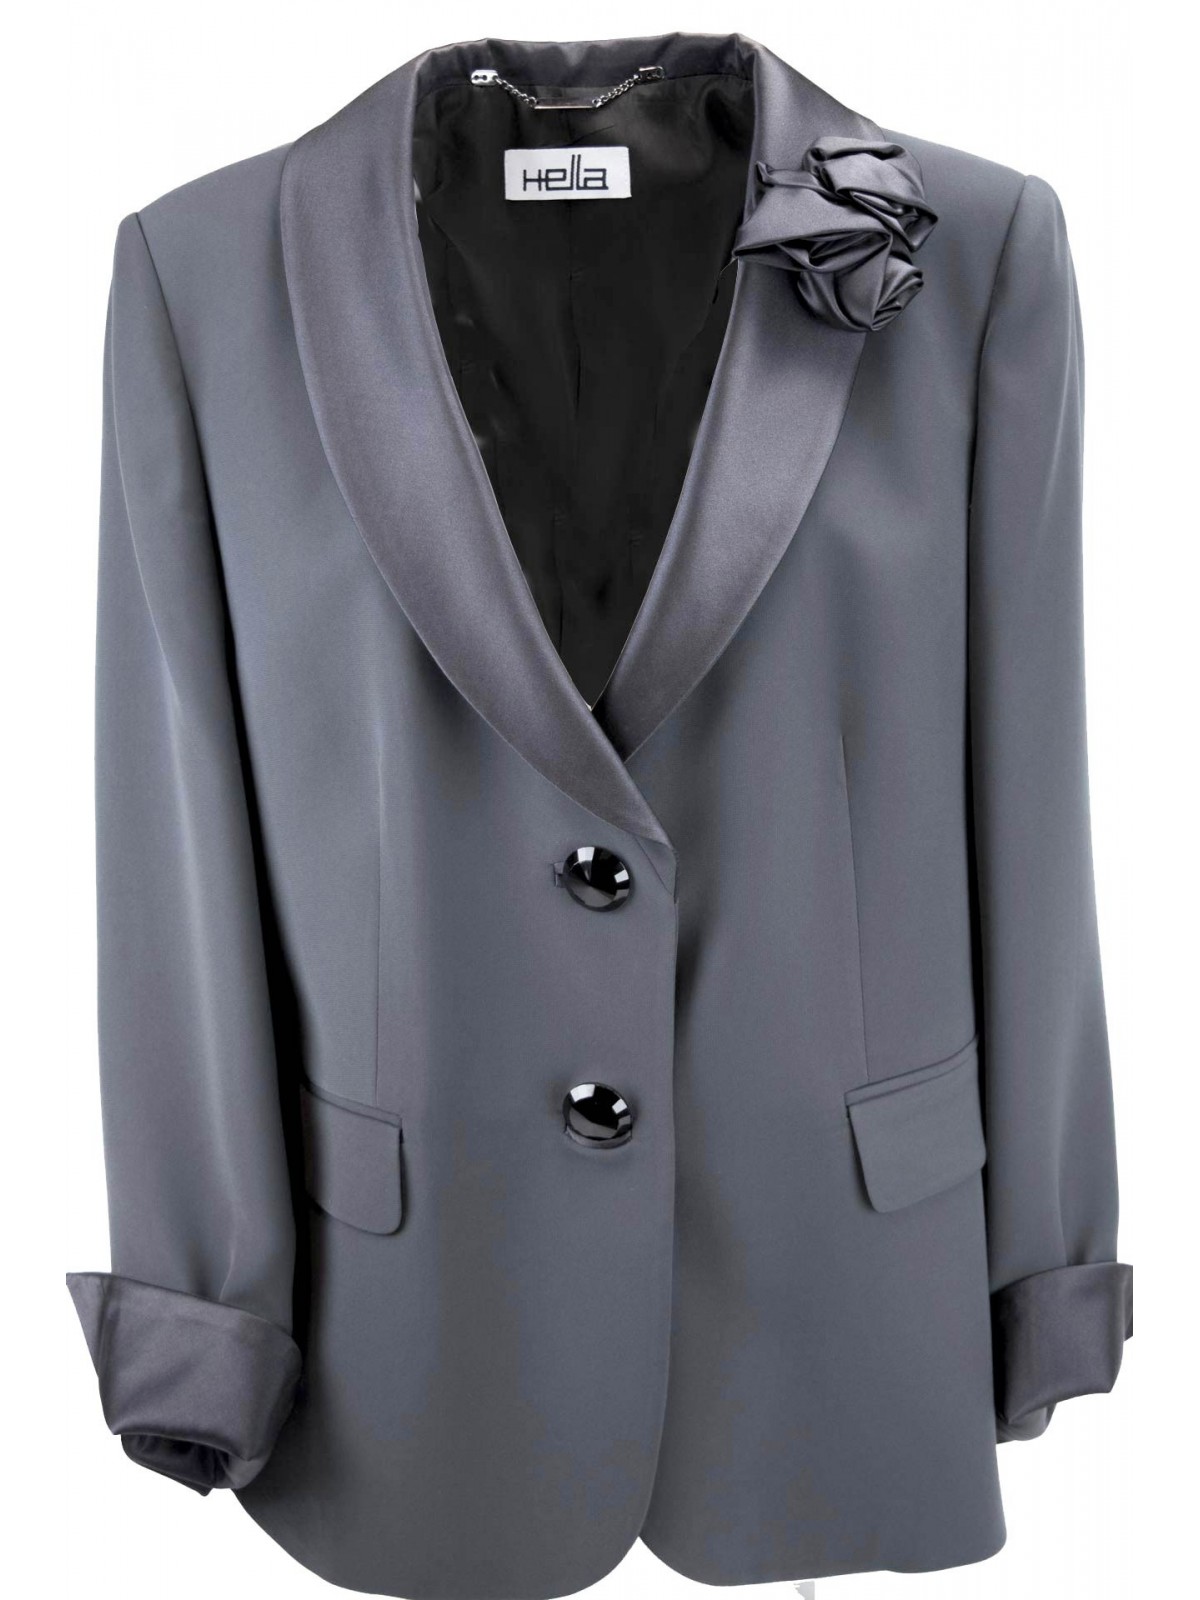 Tuxedo jacket Women Grey 48+ size convenient - Blazer Elegant